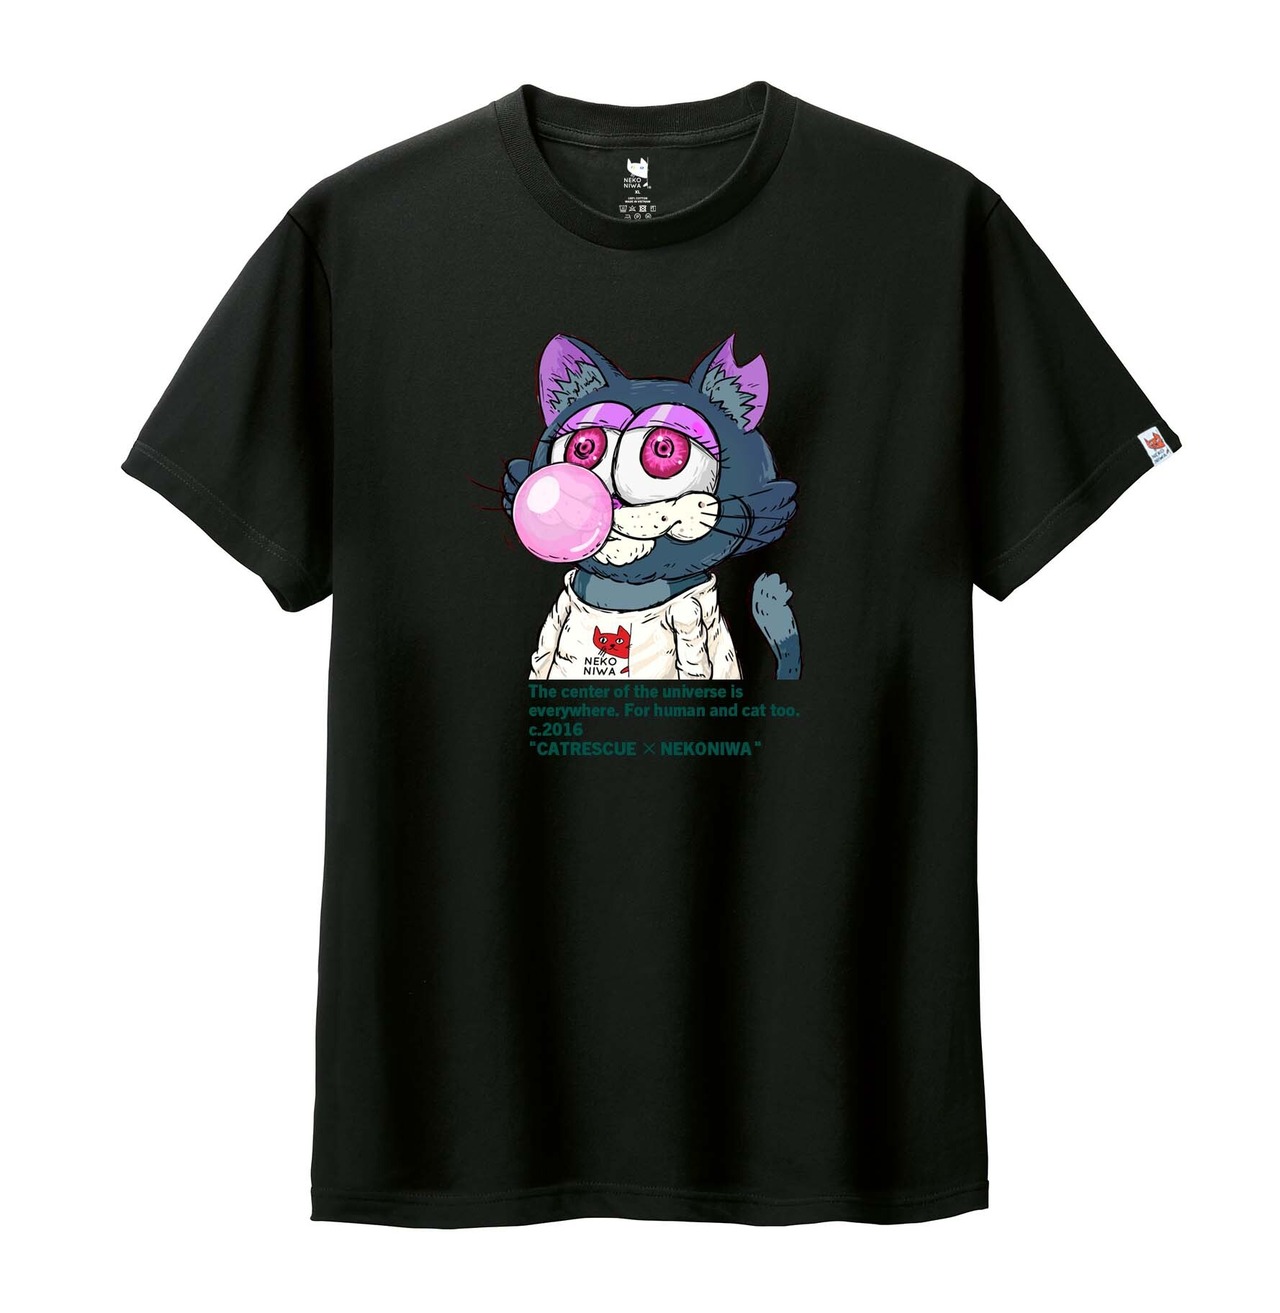 【CatRescue】Chewing-gum Cat T-shirt　★全国送料無料!!★